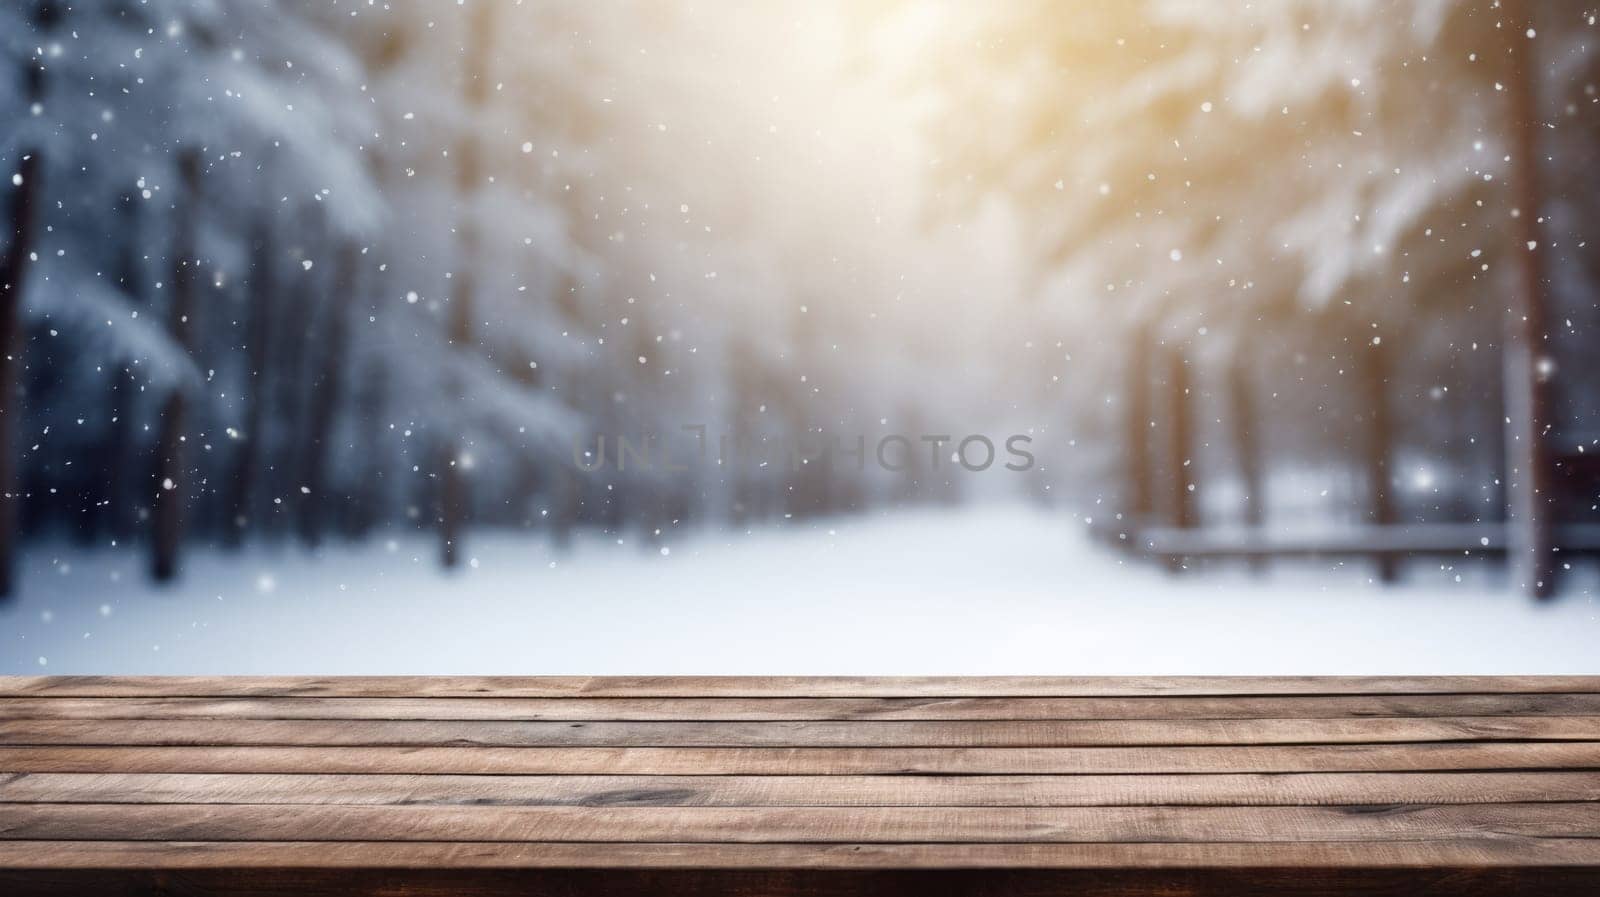 Empty table in beautiful winter landscape, wood plank board in snow mountain outdoor comeliness